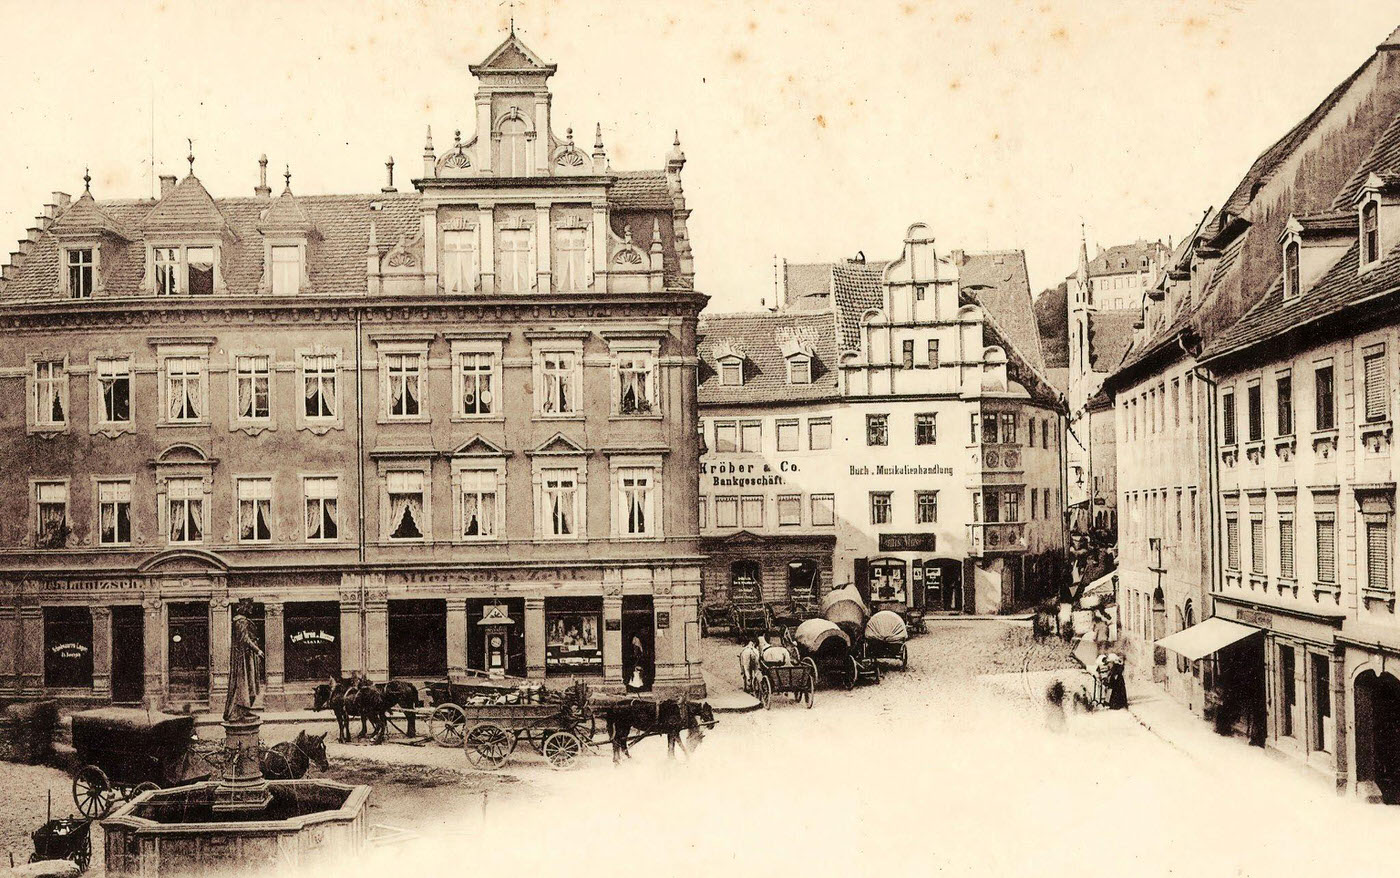 Water wells, carriages, Heinrichsplatz, Saxony, Germany, 1902